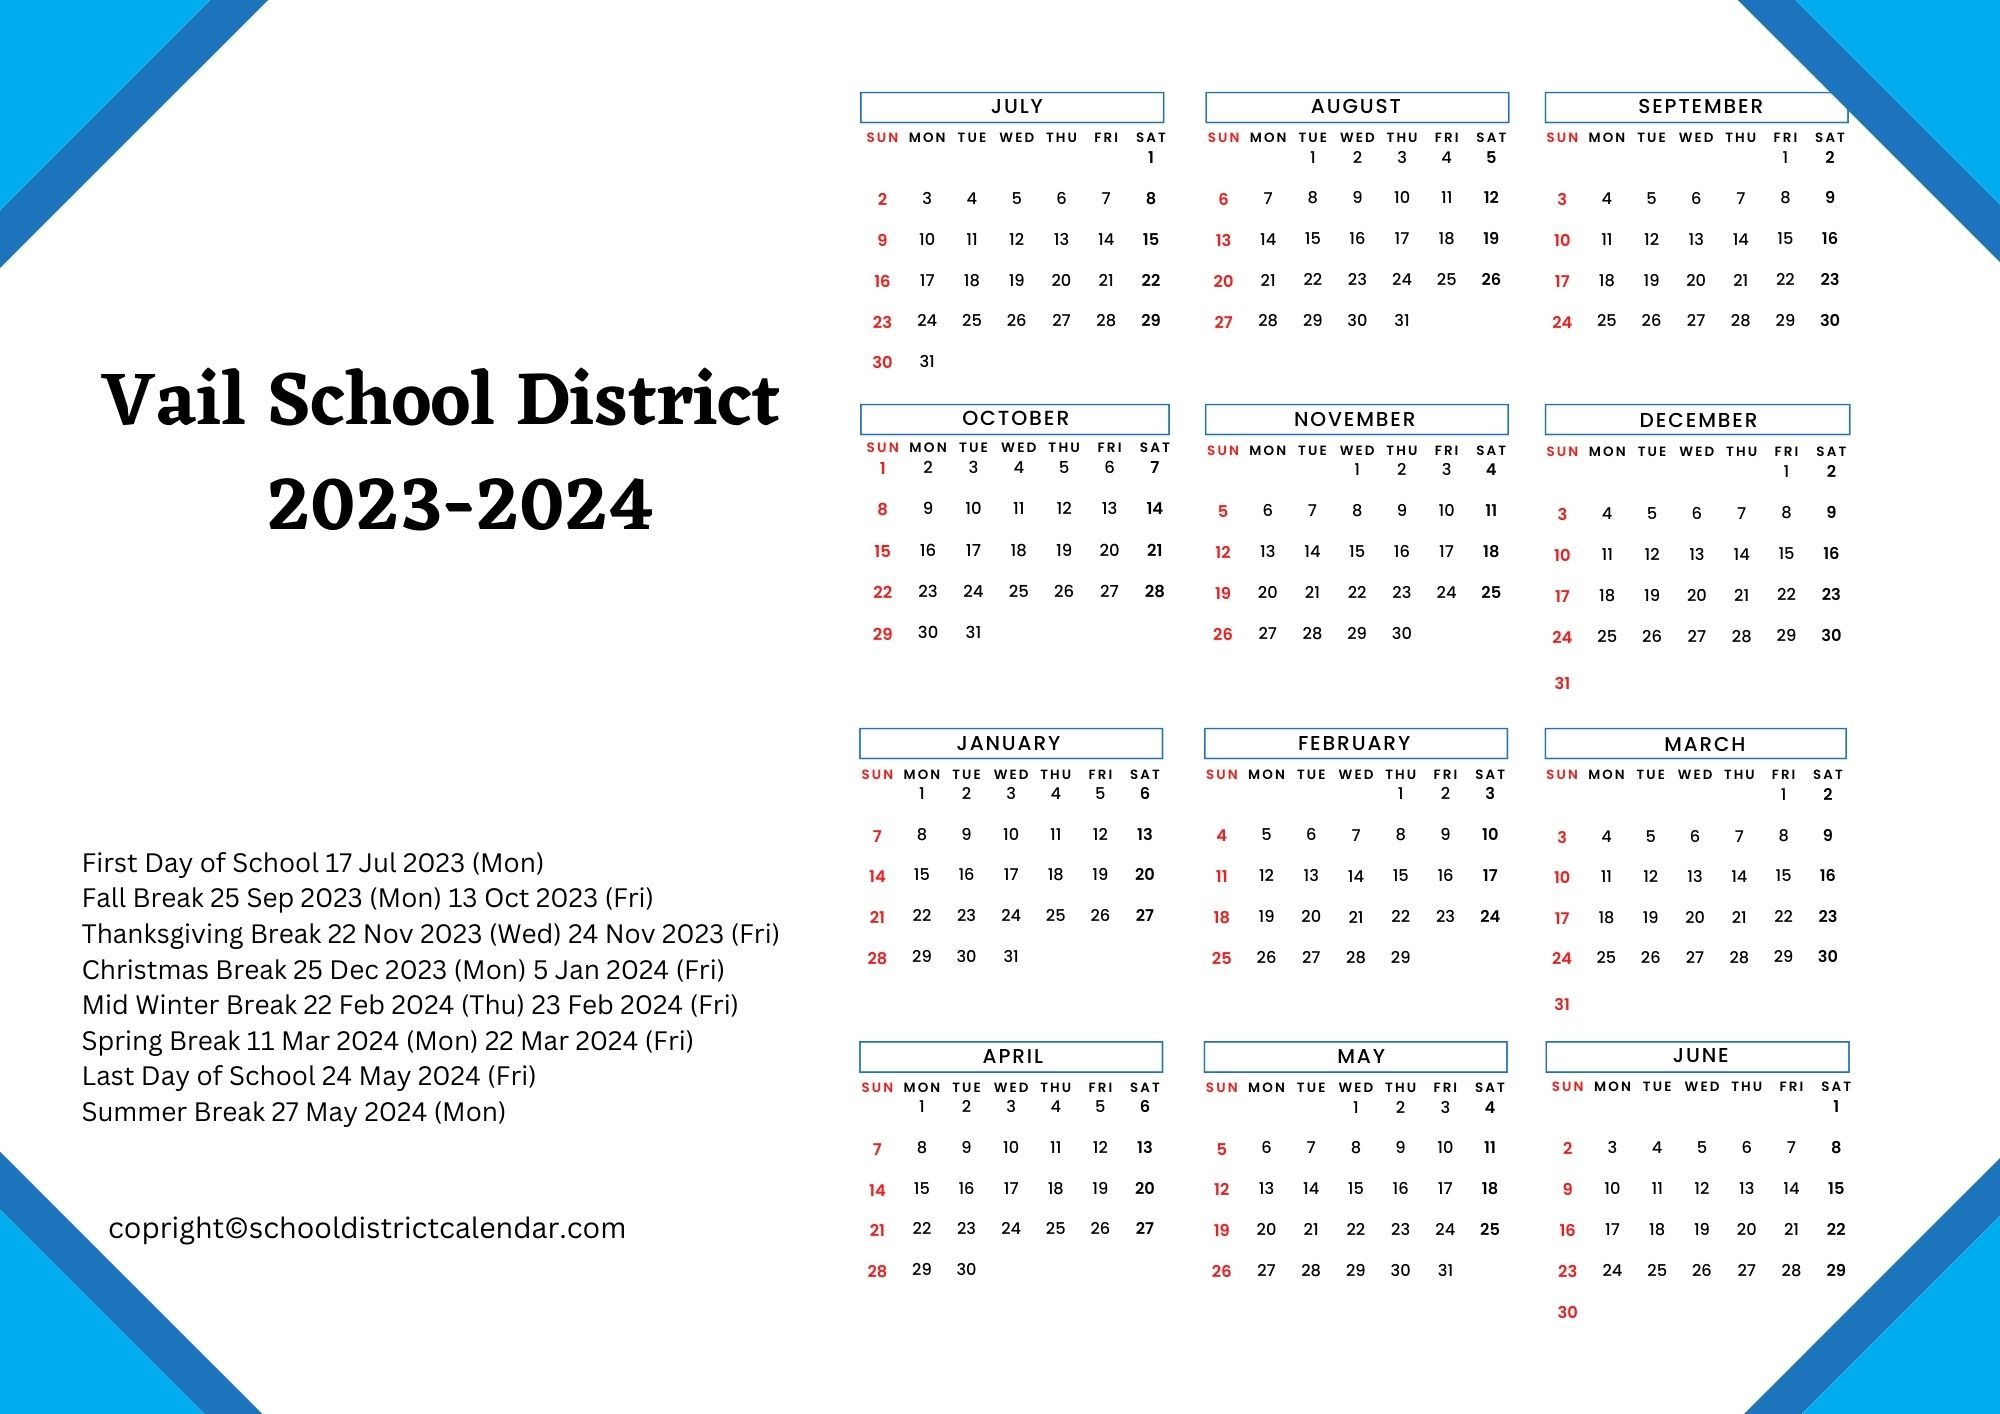 Vail School District Calendar Holidays 2023-2024